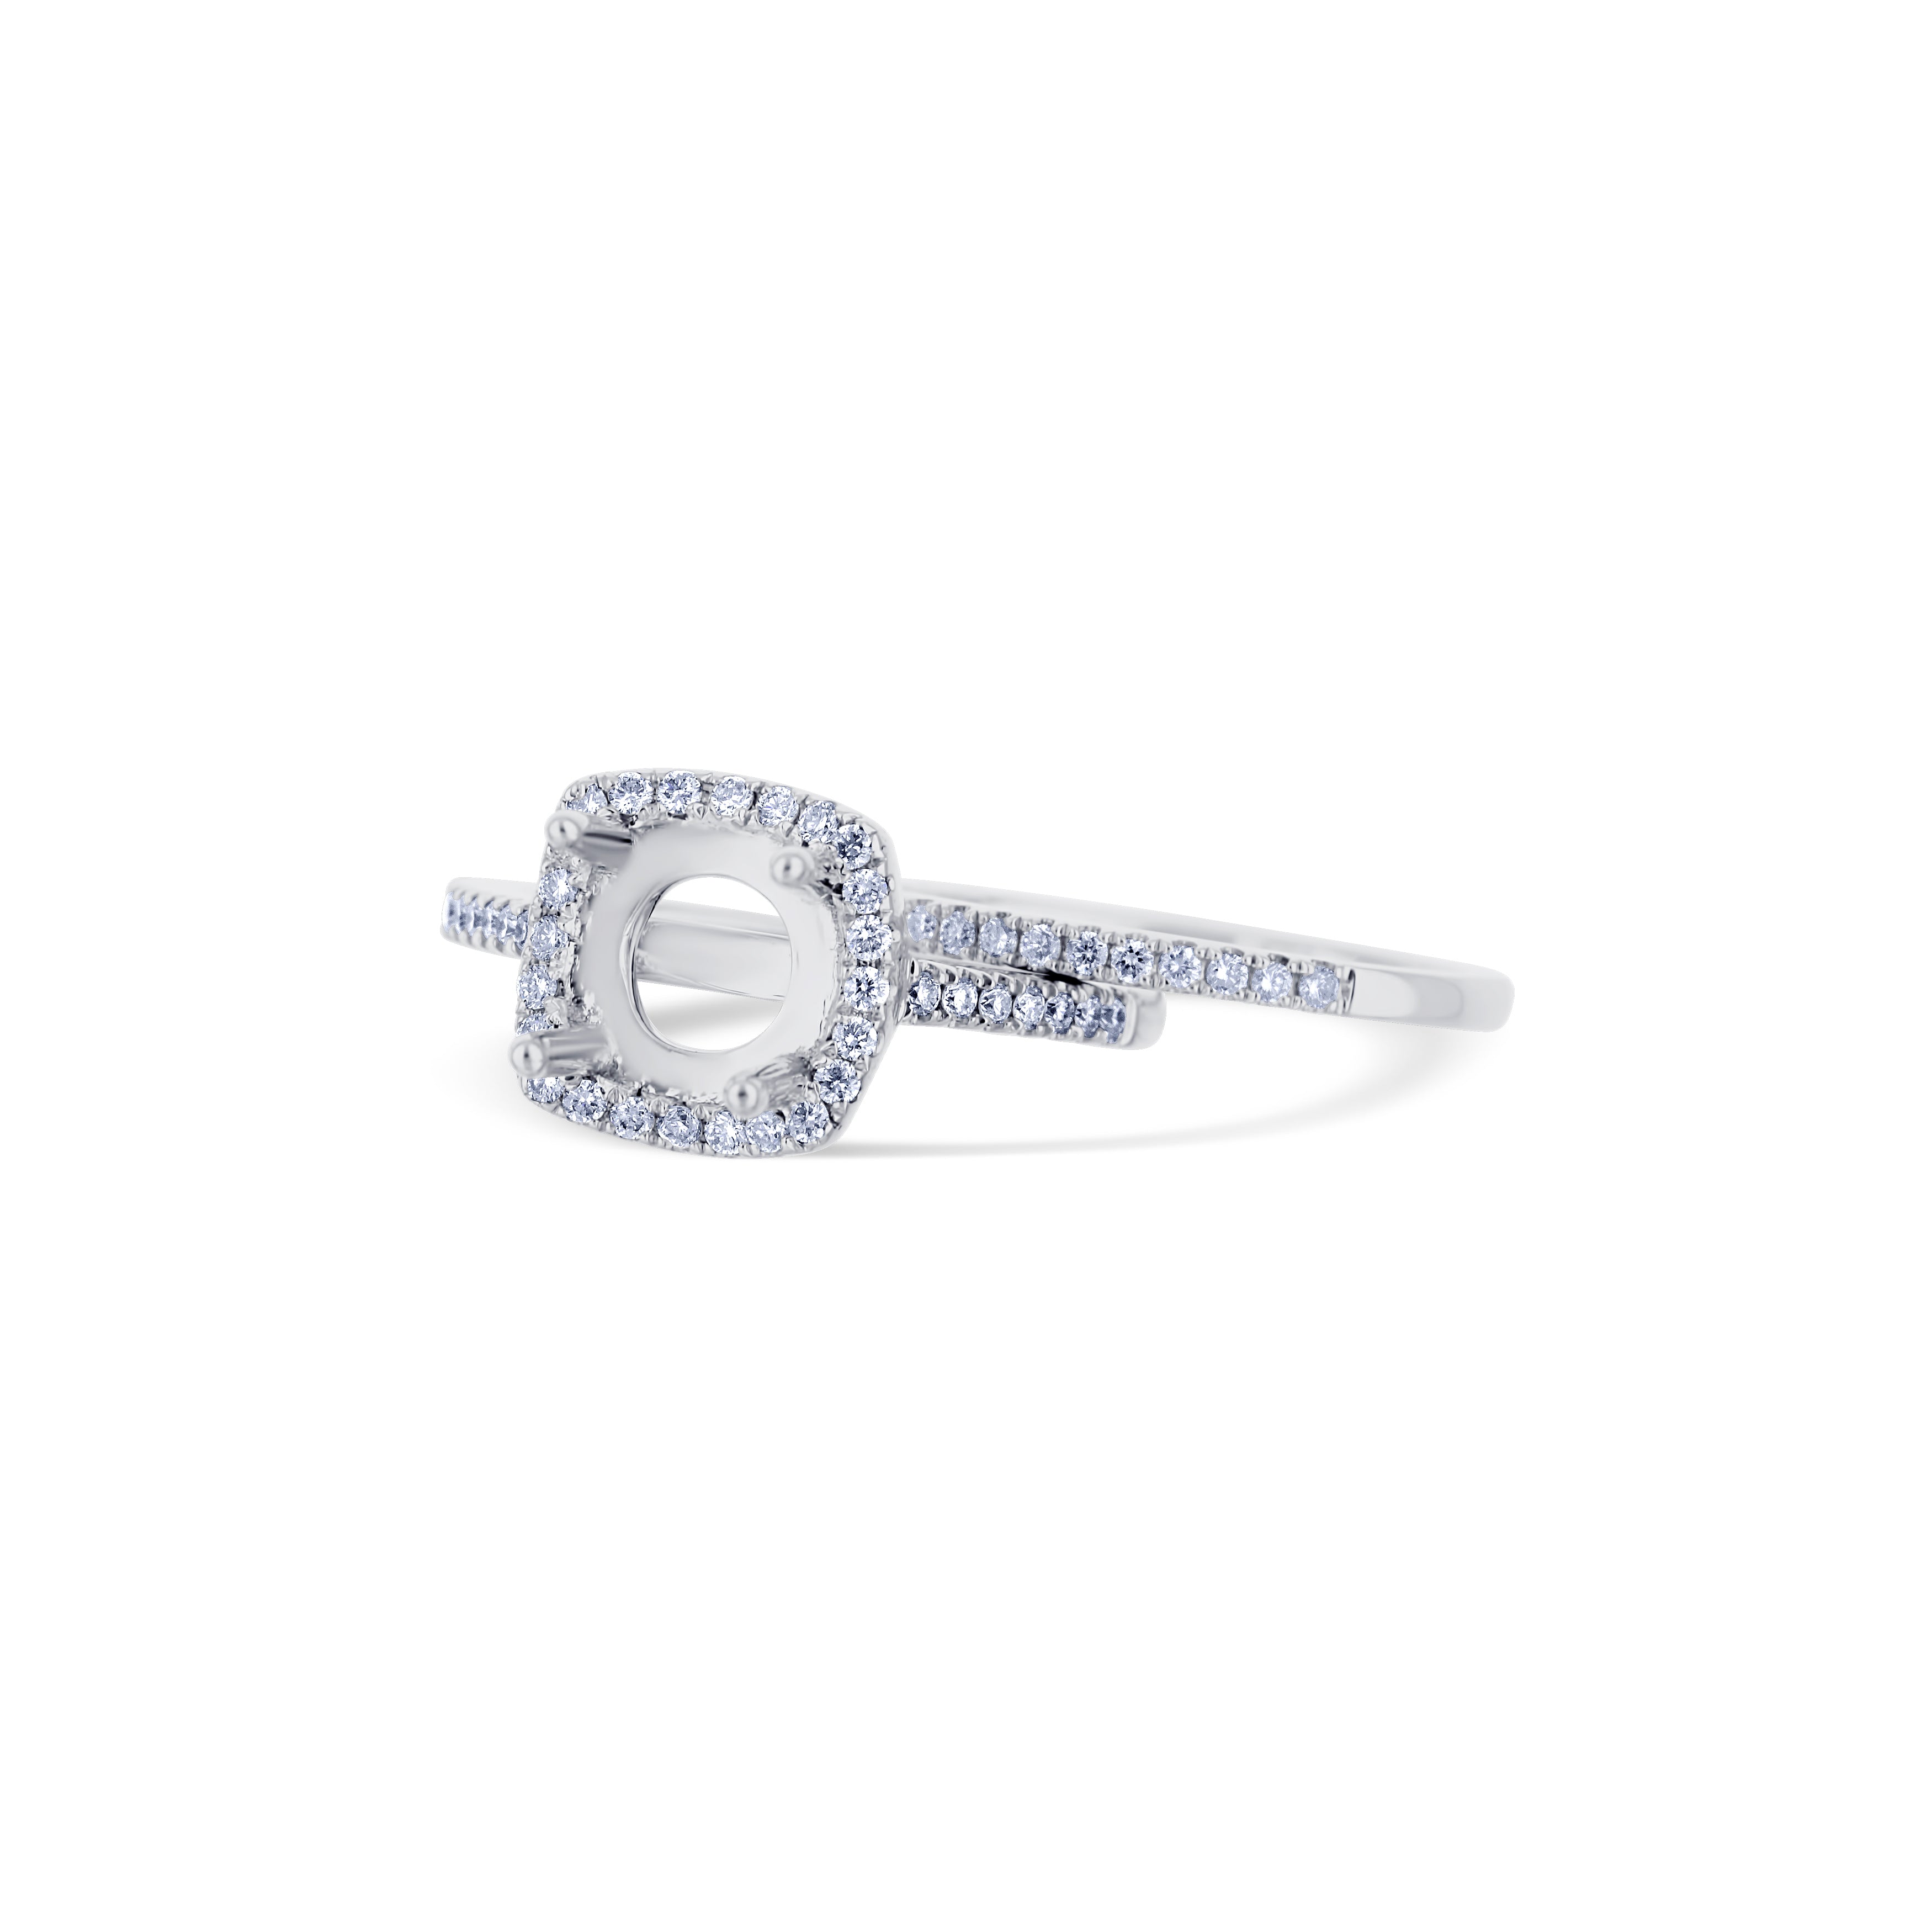 18K White Gold Diamond Square Halo Bridal Set Of Mounting & Band For A Round Center Diamond